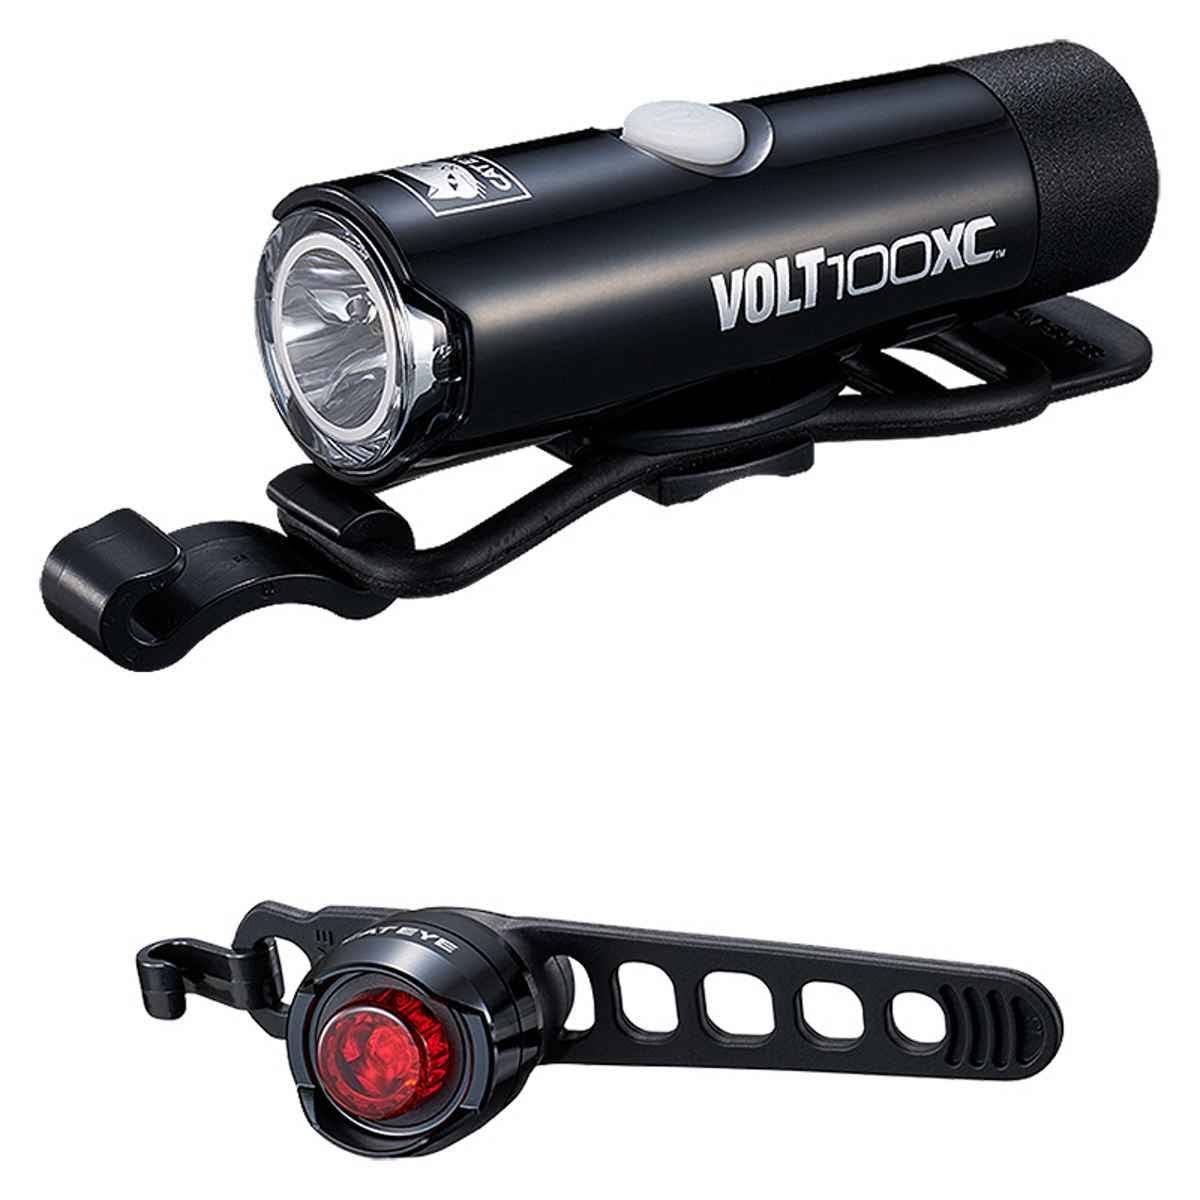 Cateye Volt 100 XC / ORB Rechargeable Bike Light Set - Black / Light Set / Rechargeable